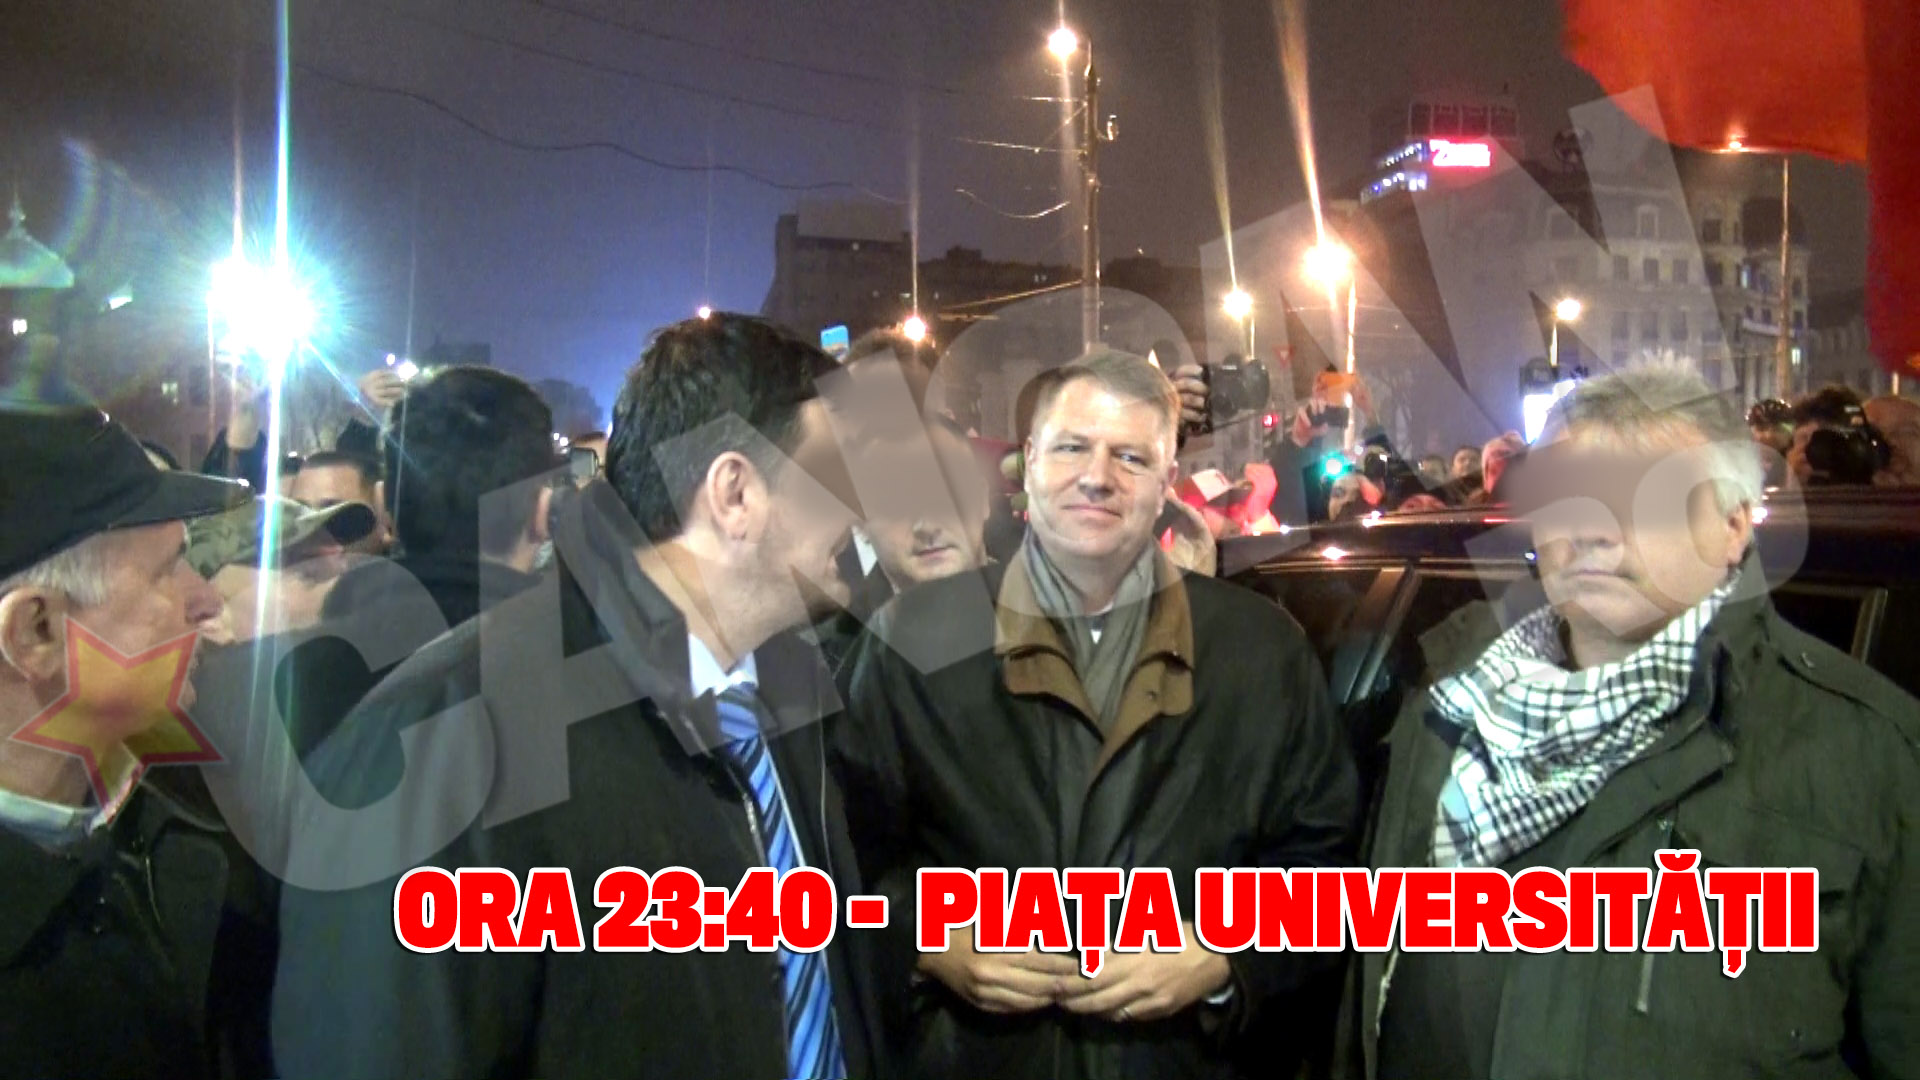 Klaus Iohannis este primit in aplauze de catre oamenii care s-au strans la Piata Universitatii